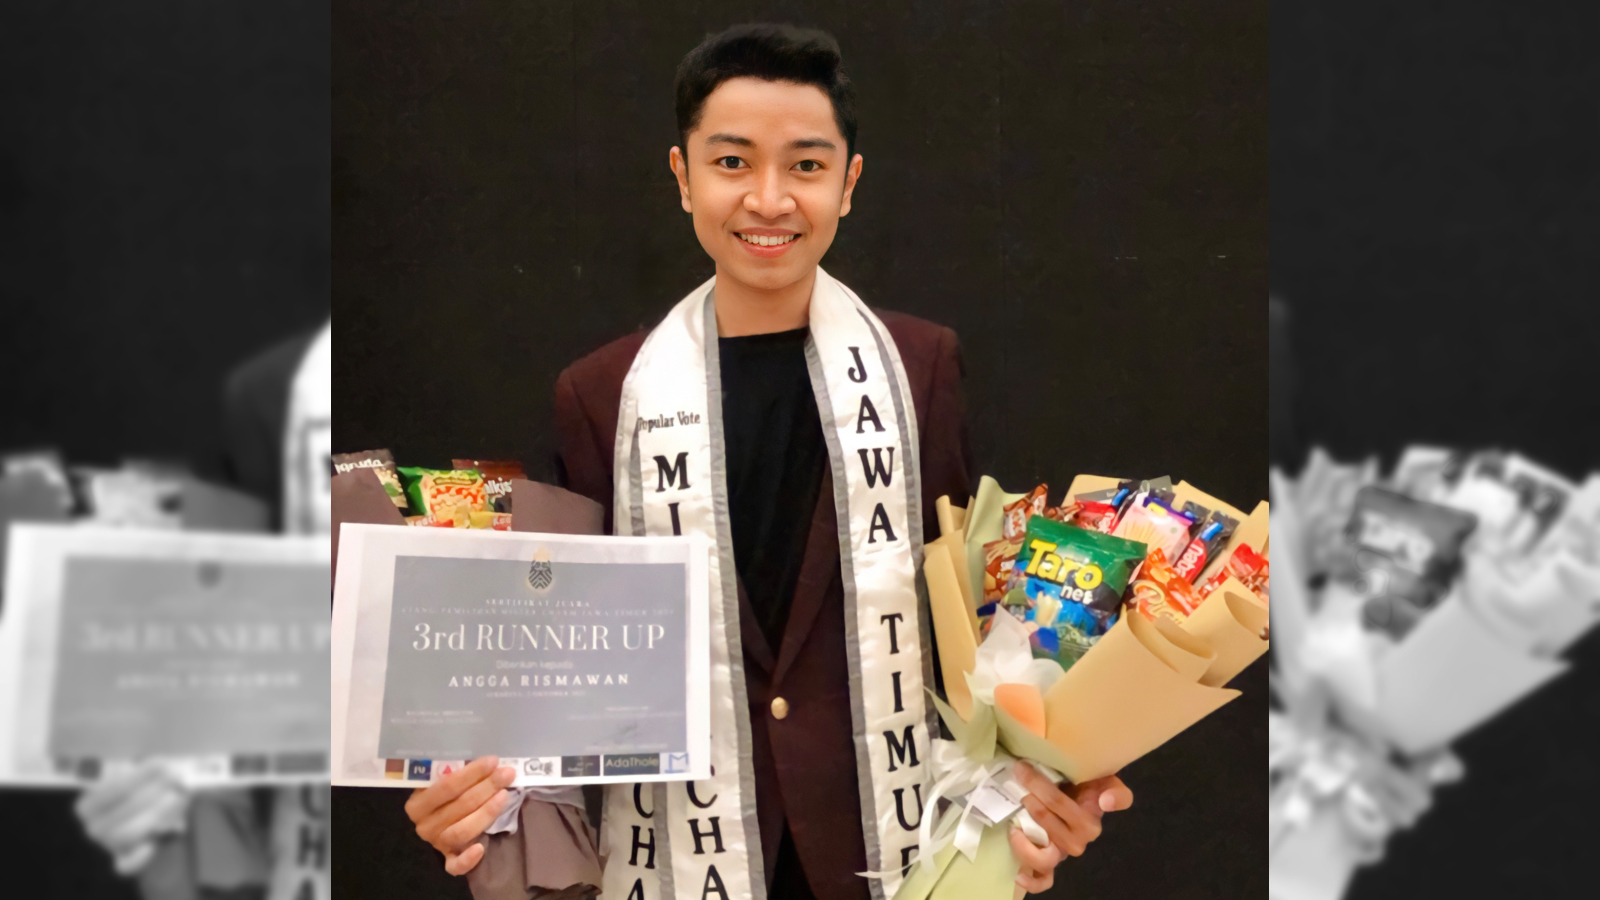 Mahasiswa S1 FEB UNAIR Sukses Raih 3rd Runner Up Mister Charm Jatim 2021